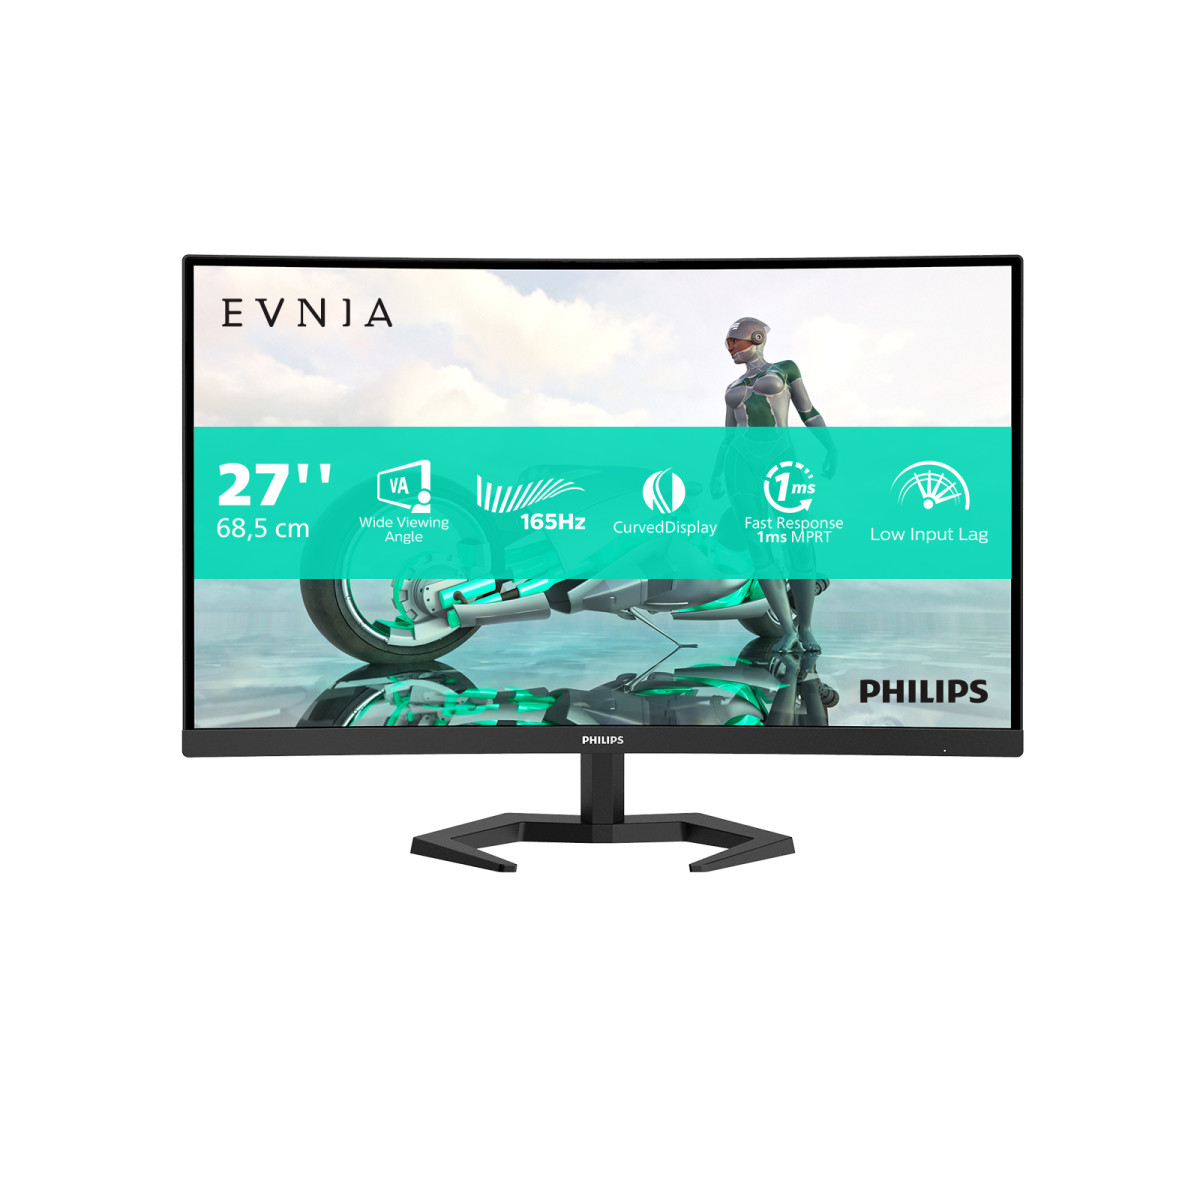 Evnia 27 FHD 165Hz Gaming monitor